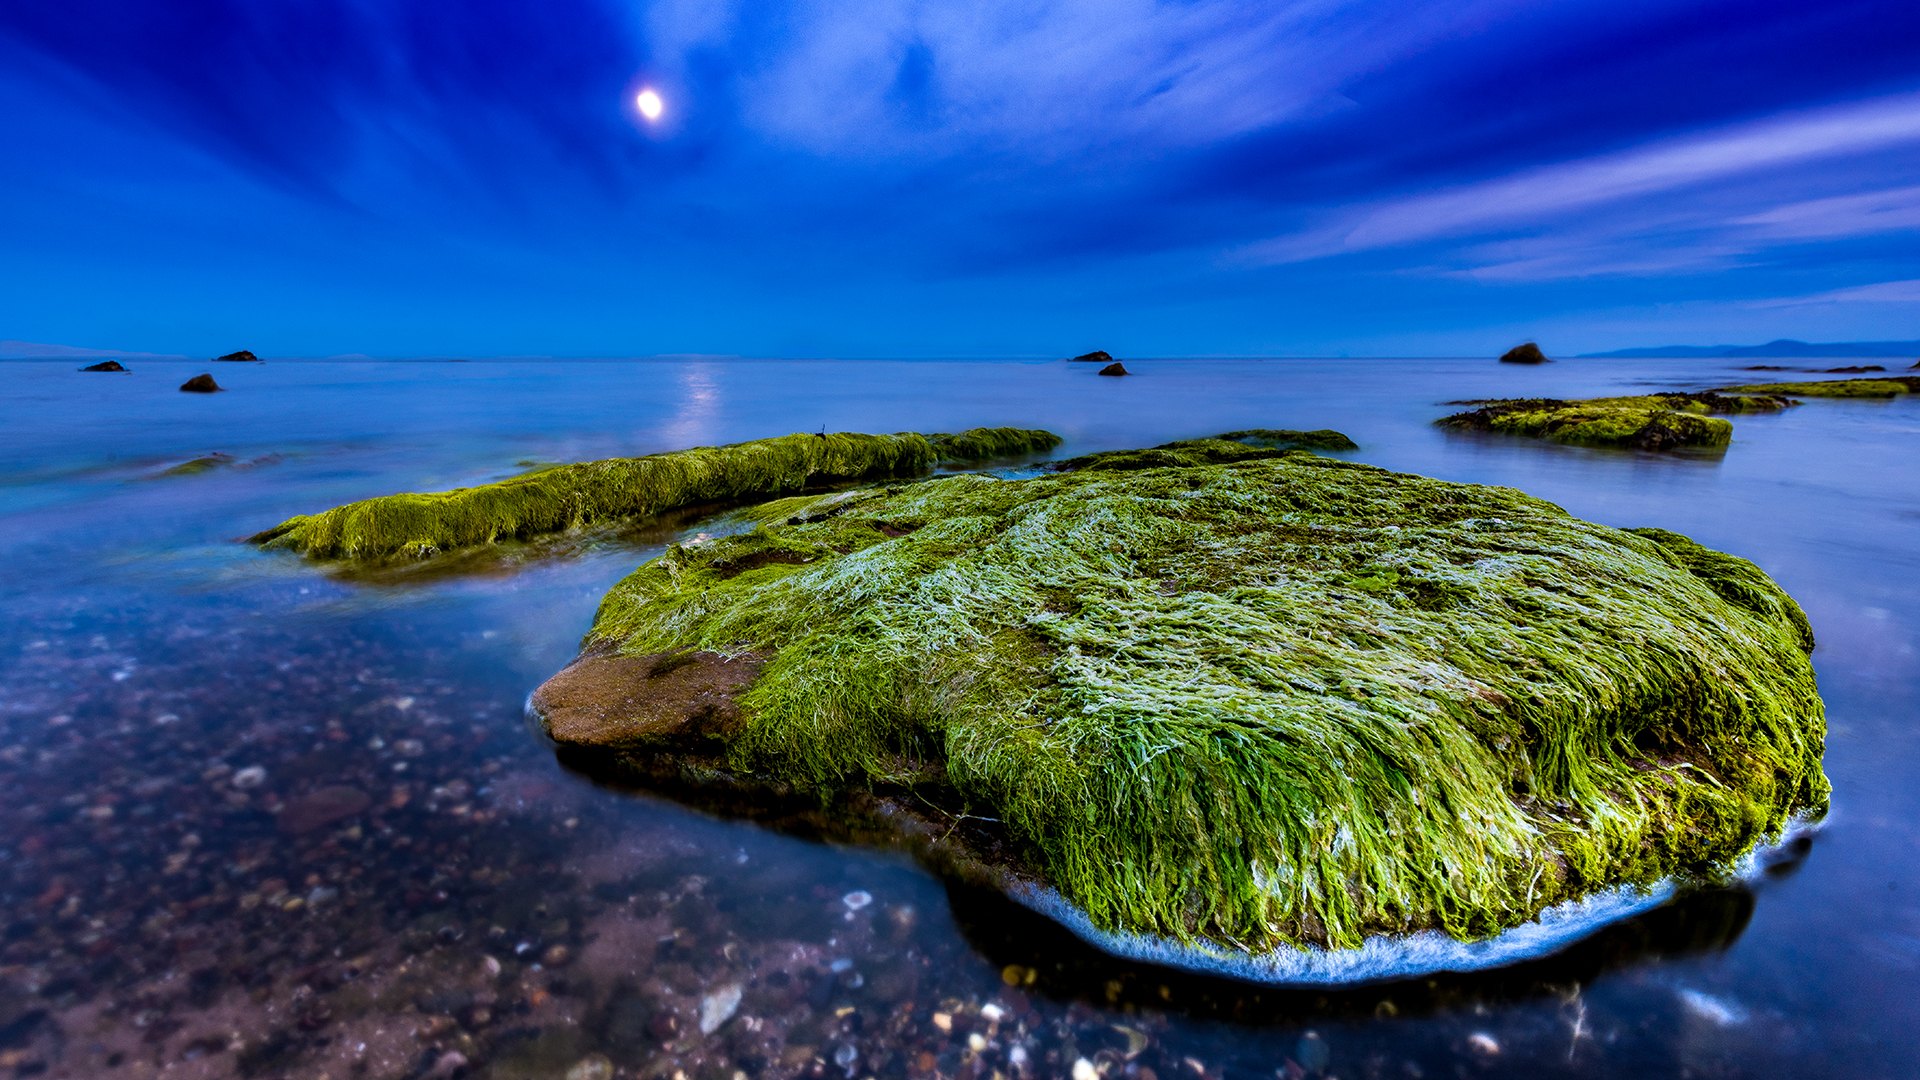 General 1920x1080 nature landscape night Moon clouds Scotland UK sea seaweed horizon rocks long exposure